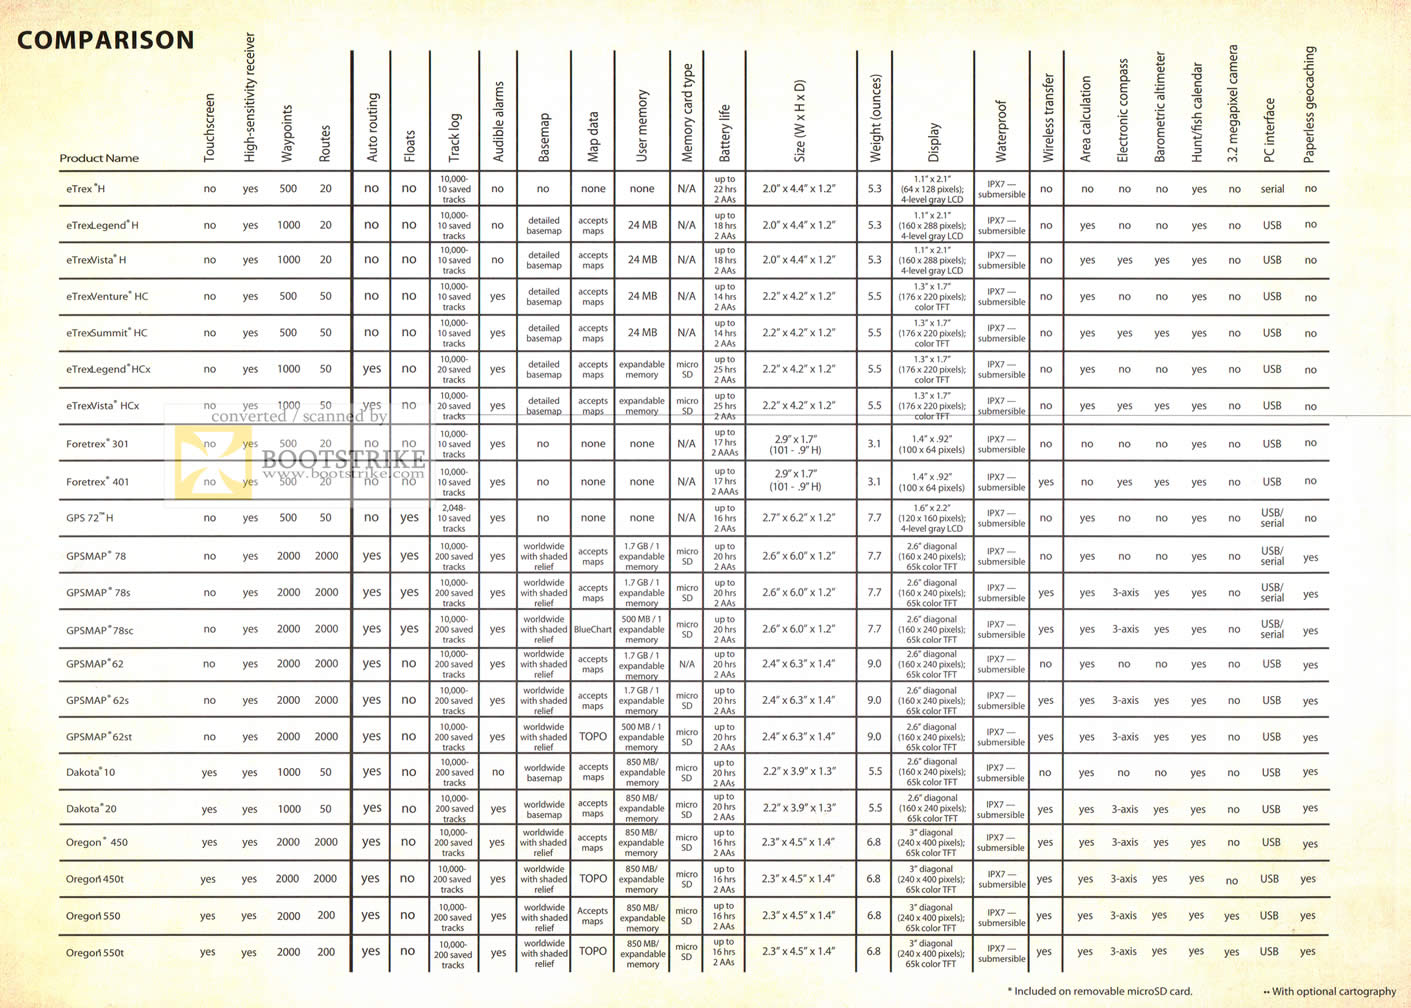 Allbright Garmin GPS Comparison Chart ETrex Foretrex Dakota COMEX 2011 Price Brochure Flyer Image